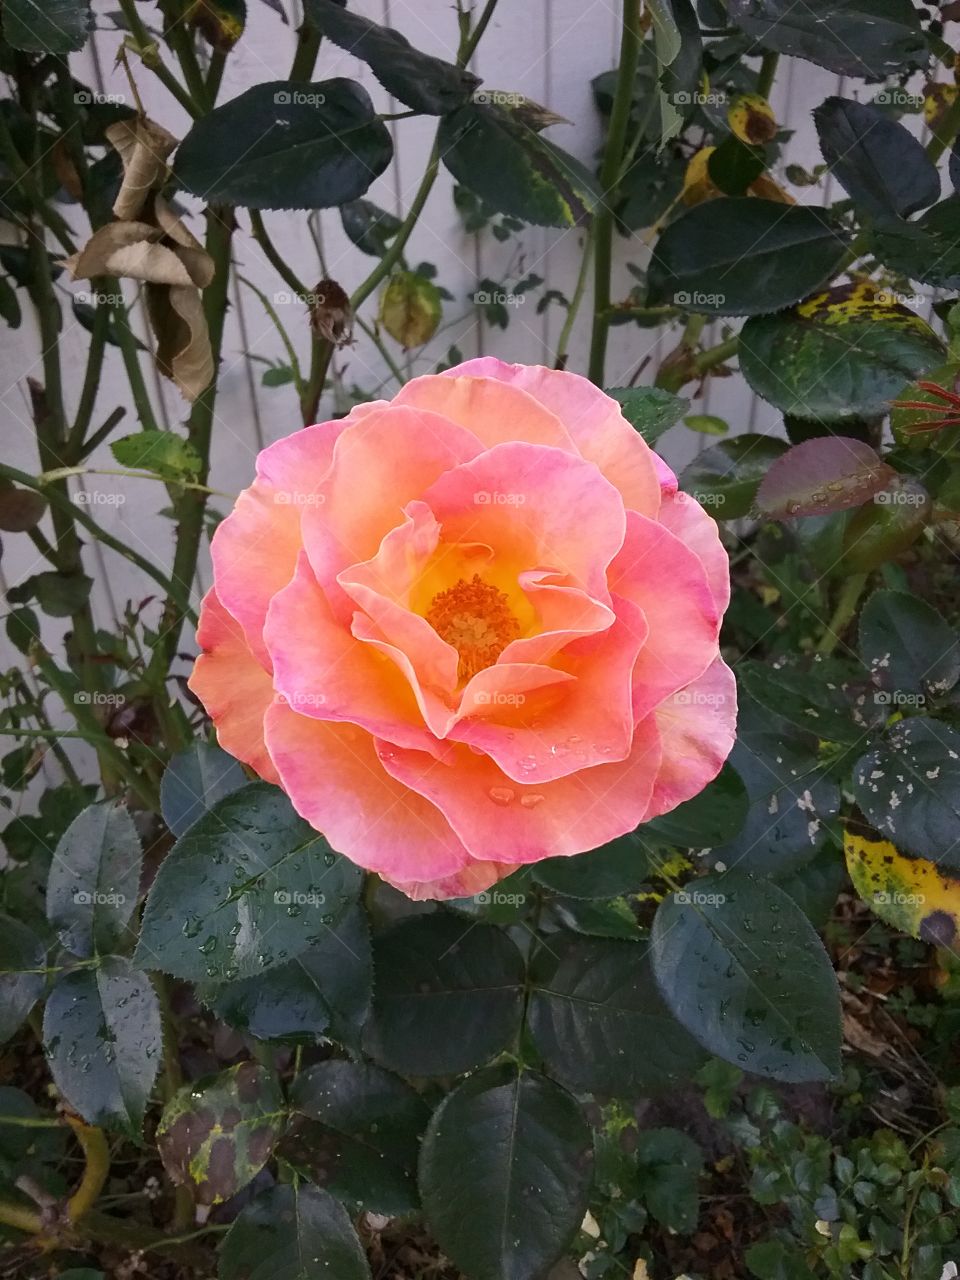 yellow to pink rose